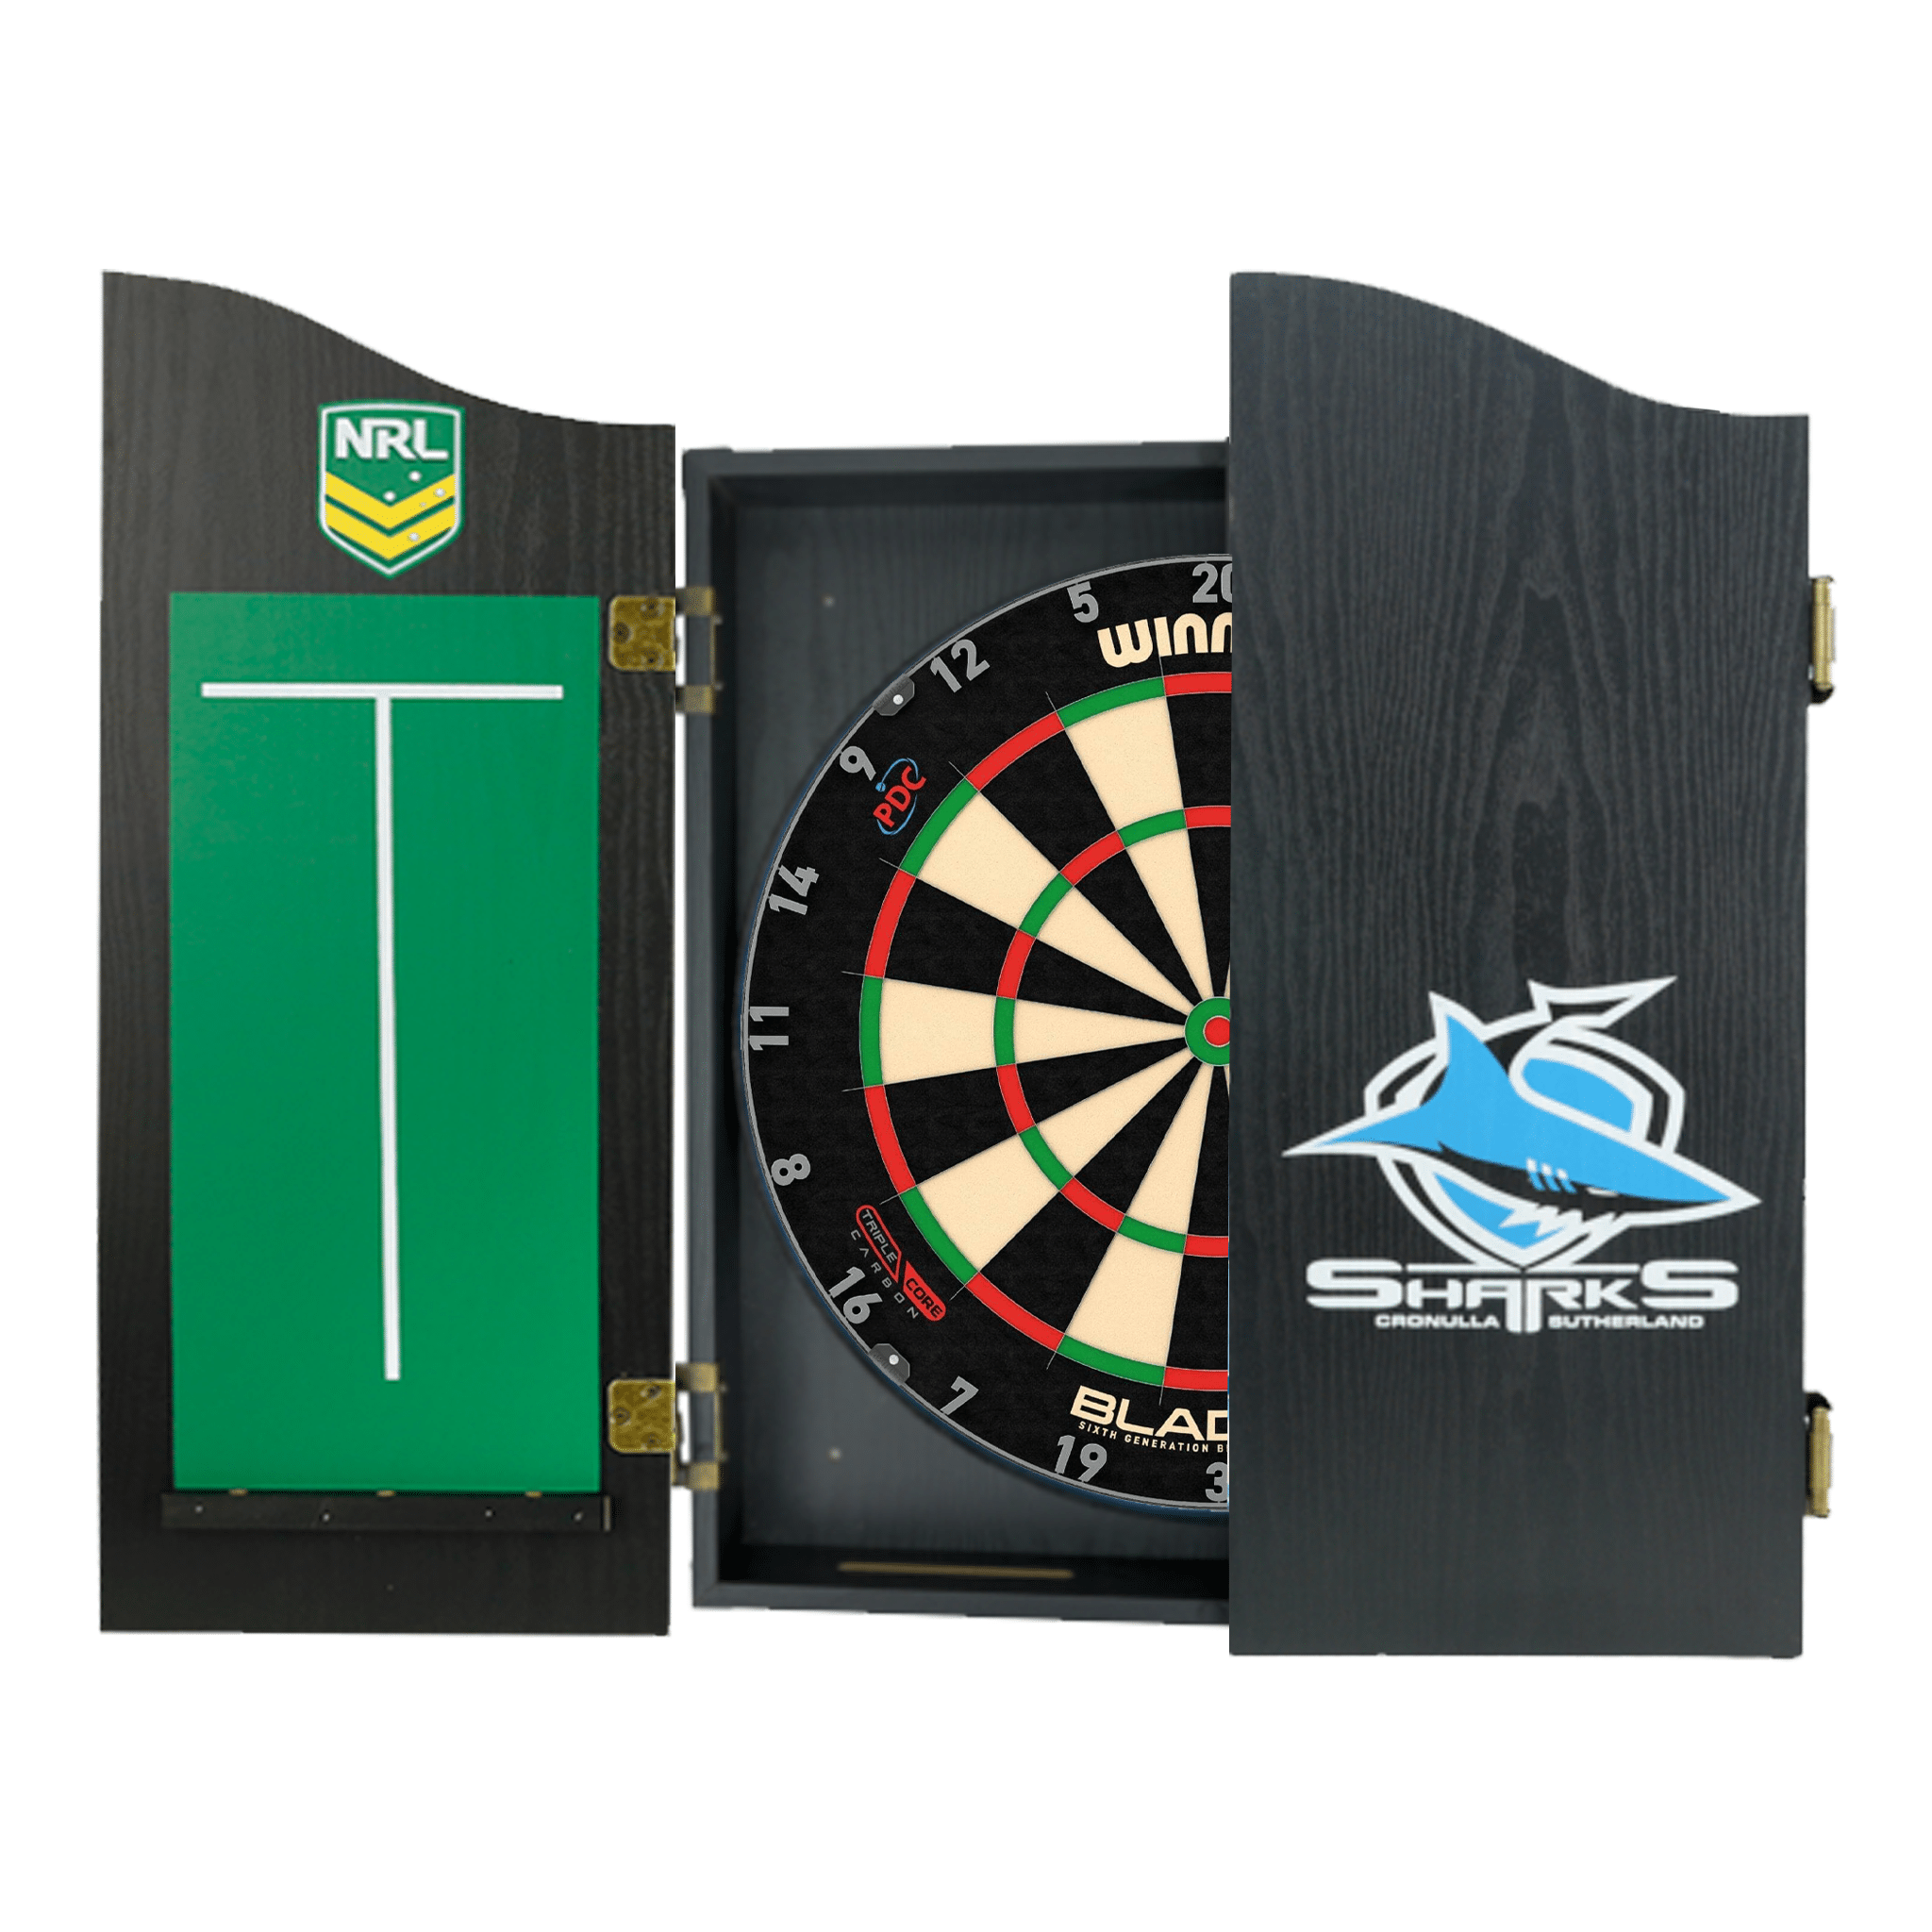 Winmau Blade 6 Dartboard, Official NRL Cabinet & Darts - Complete Darts Set Boards